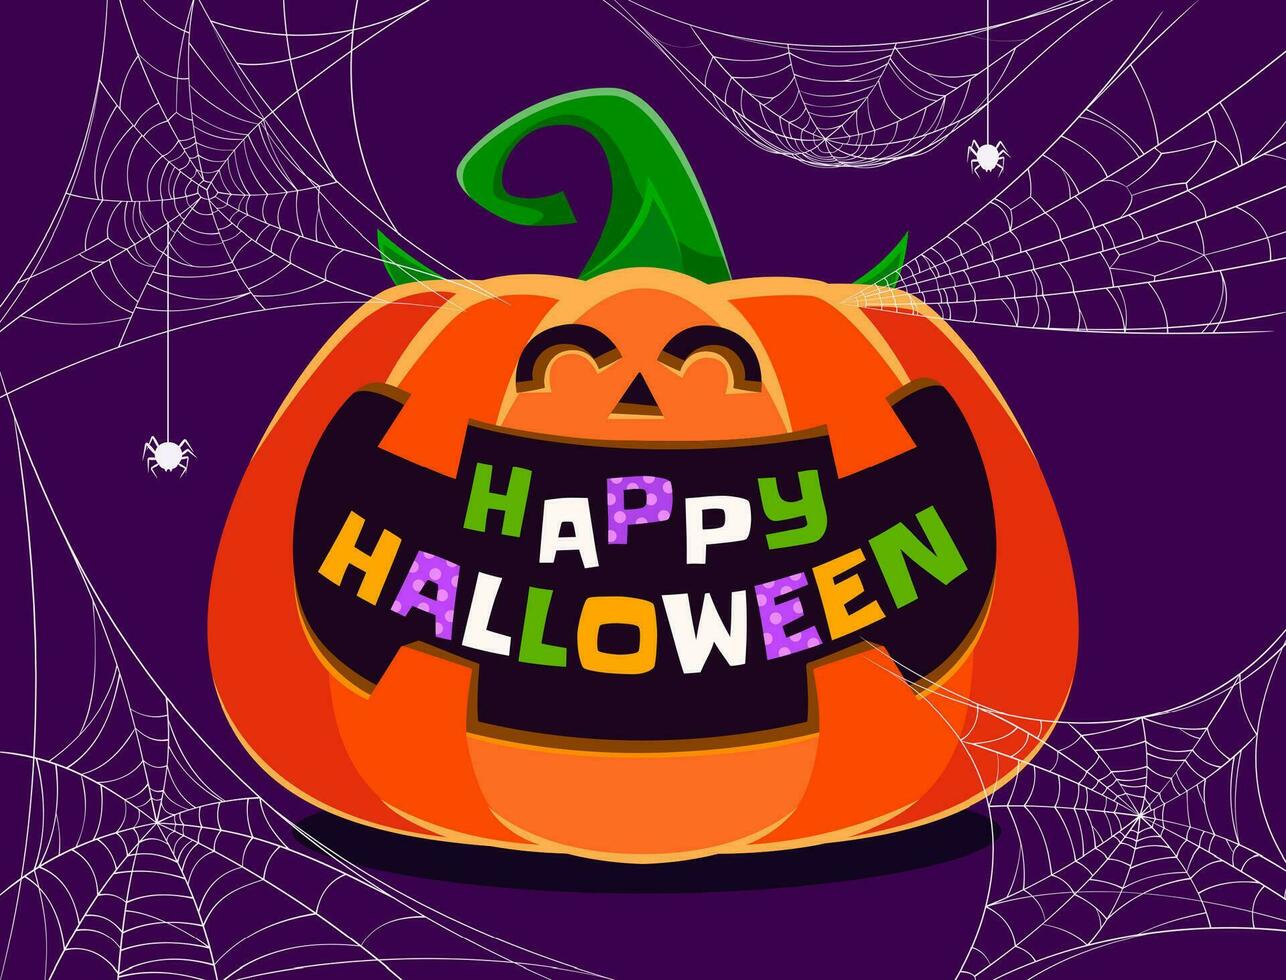 Halloween holiday pumpkin banner with spiders vector